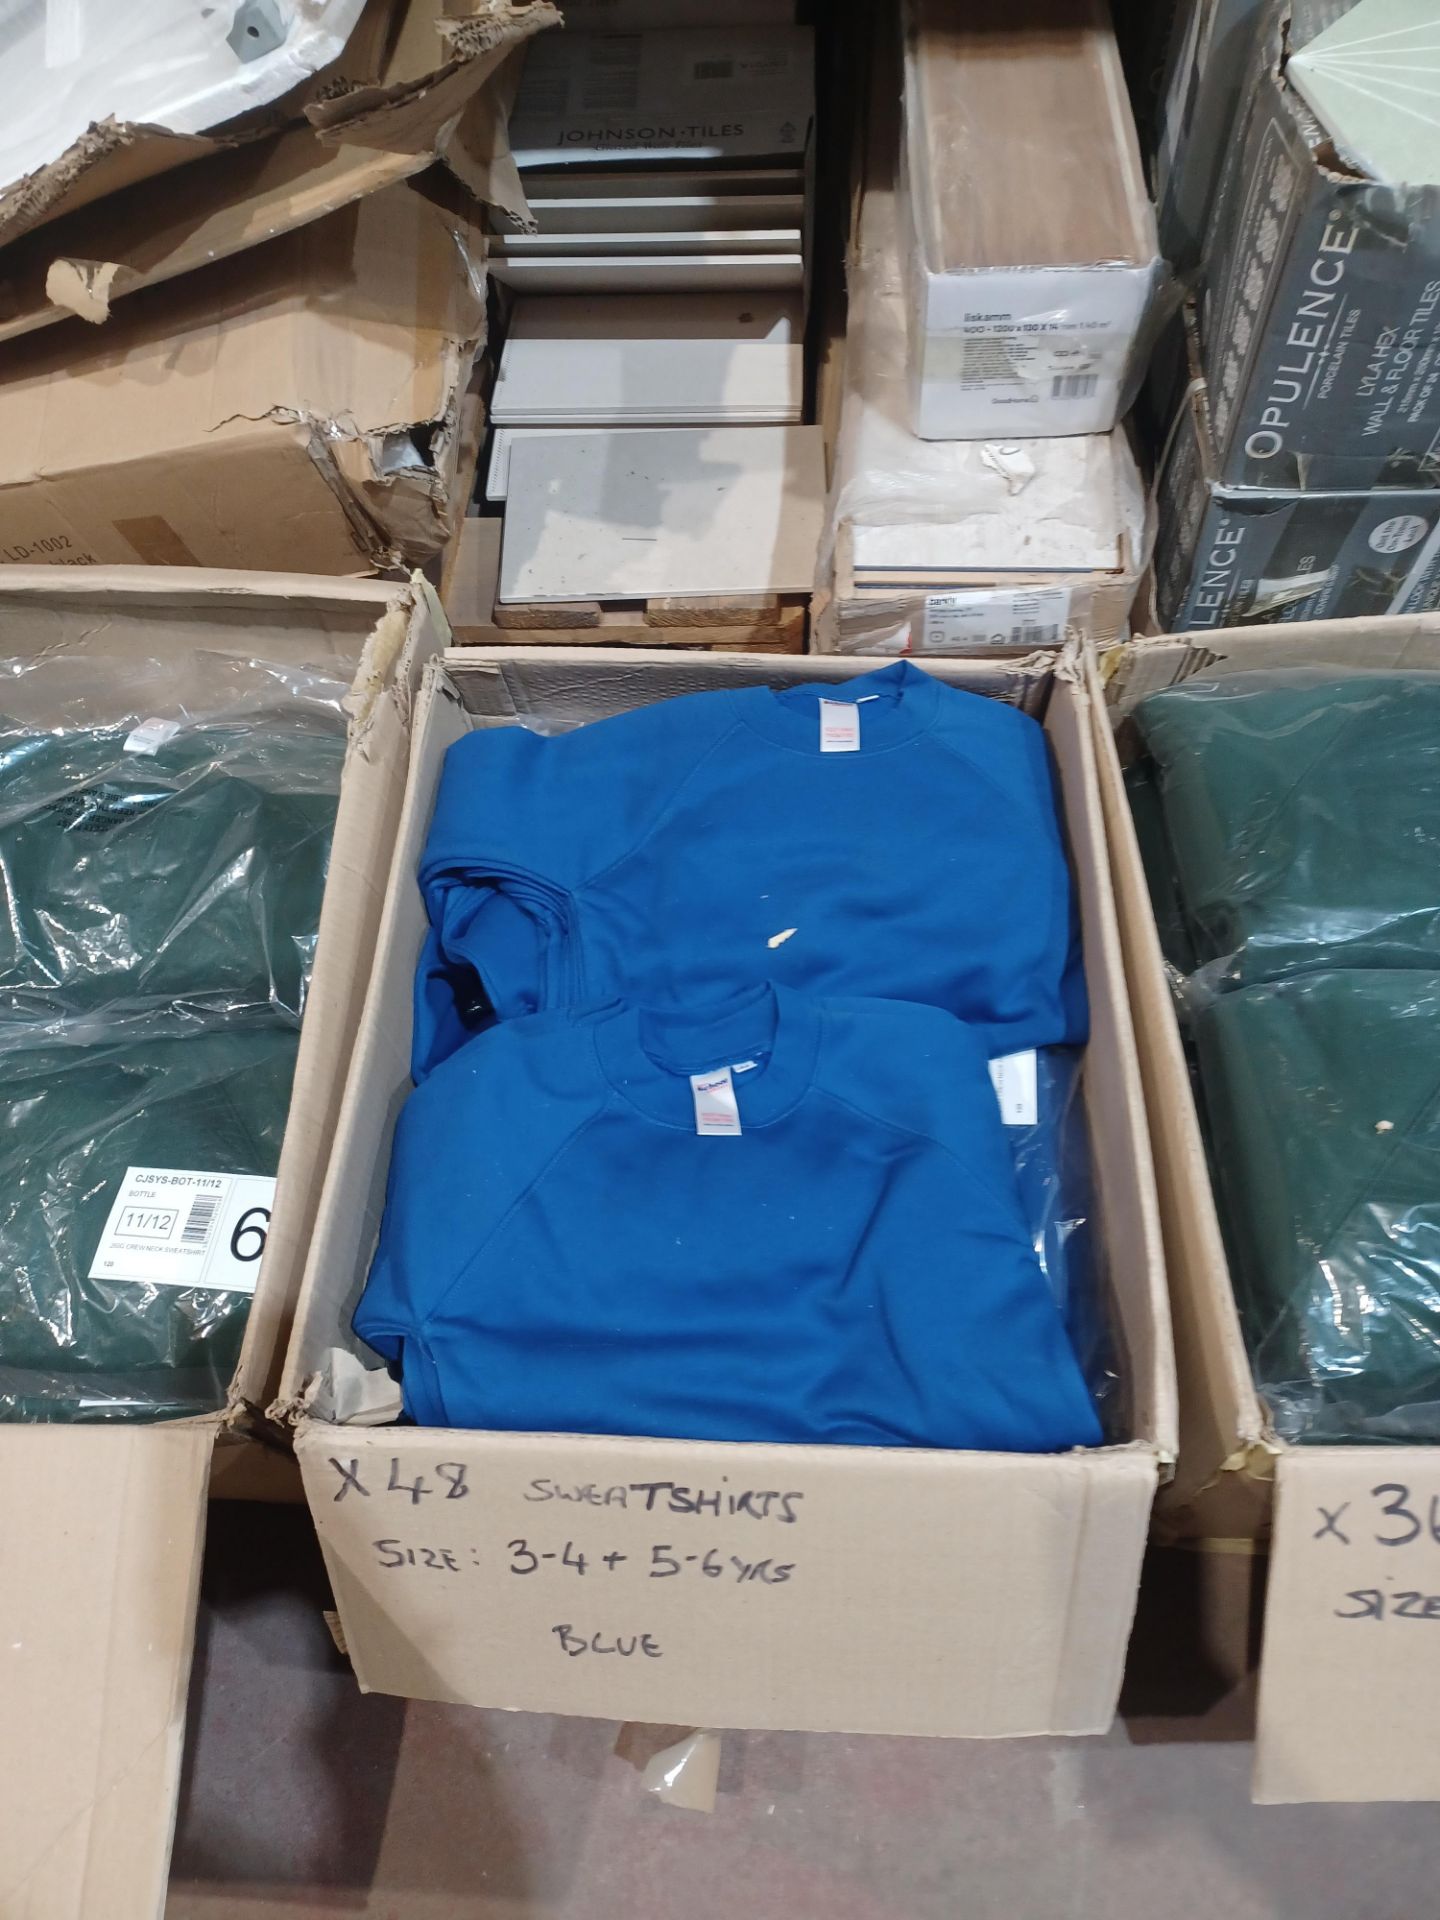 48 x Assorted Premium Sweatshirts Round Neck, In Blue, 3-4 Years & 5-6 Years. - R14. RRP £15.50